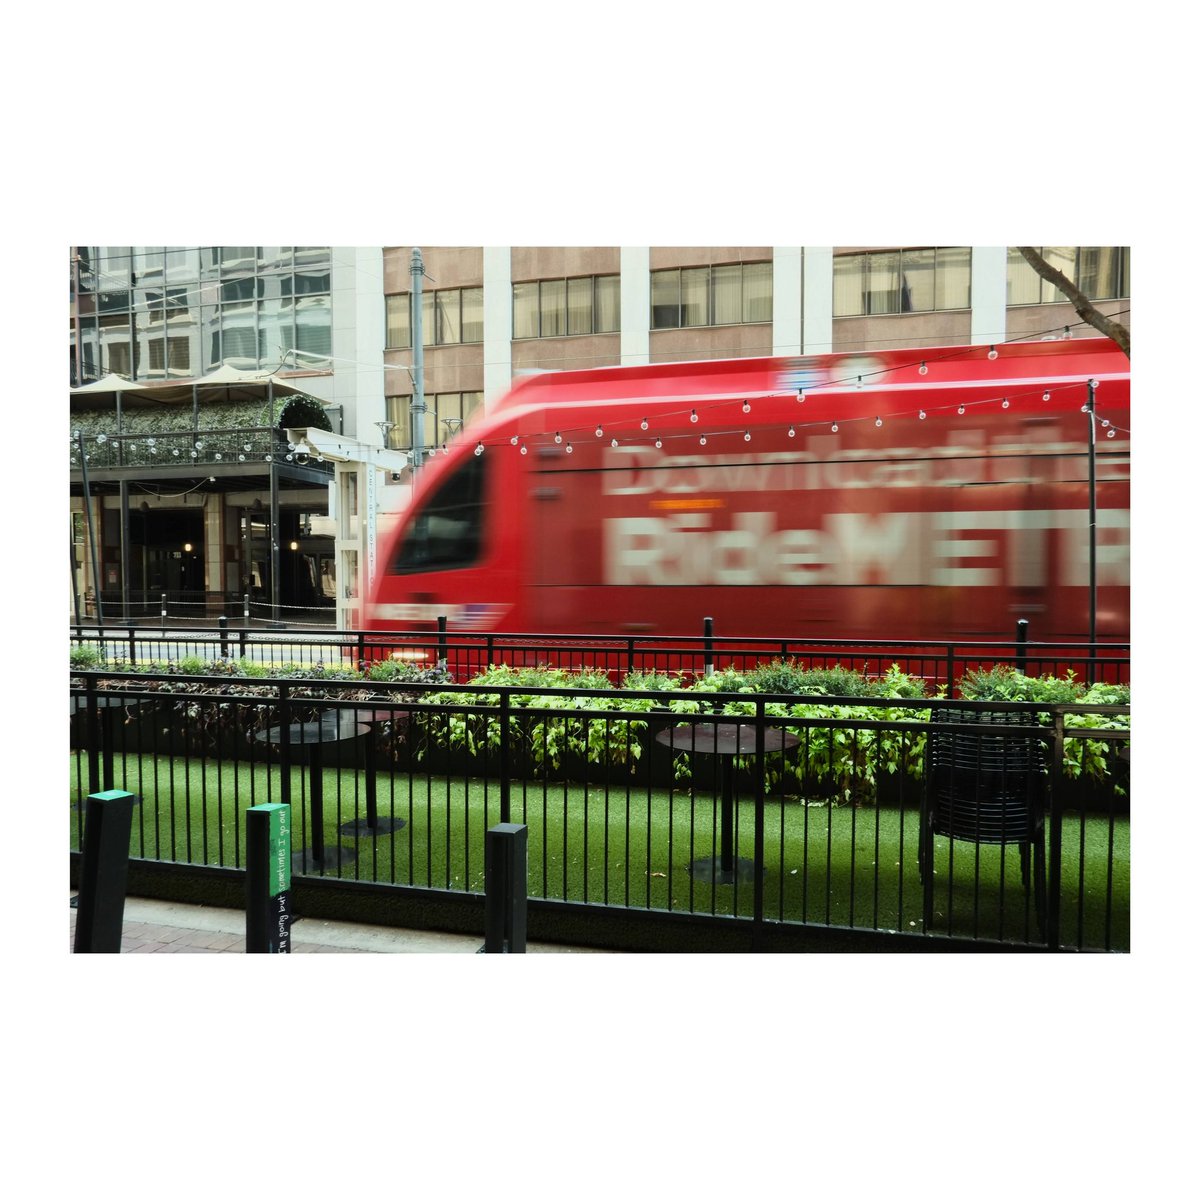 Red Metro

------------------------

#fujifilm #fujifilmxpro1 #xpro1 #photography #houstonphotography #houstonphotographer #houston #texasphptographer #texasphotography #train #trainspotting #trainsofinstagram #trolley #metro #motion #motionblur #colorphotography